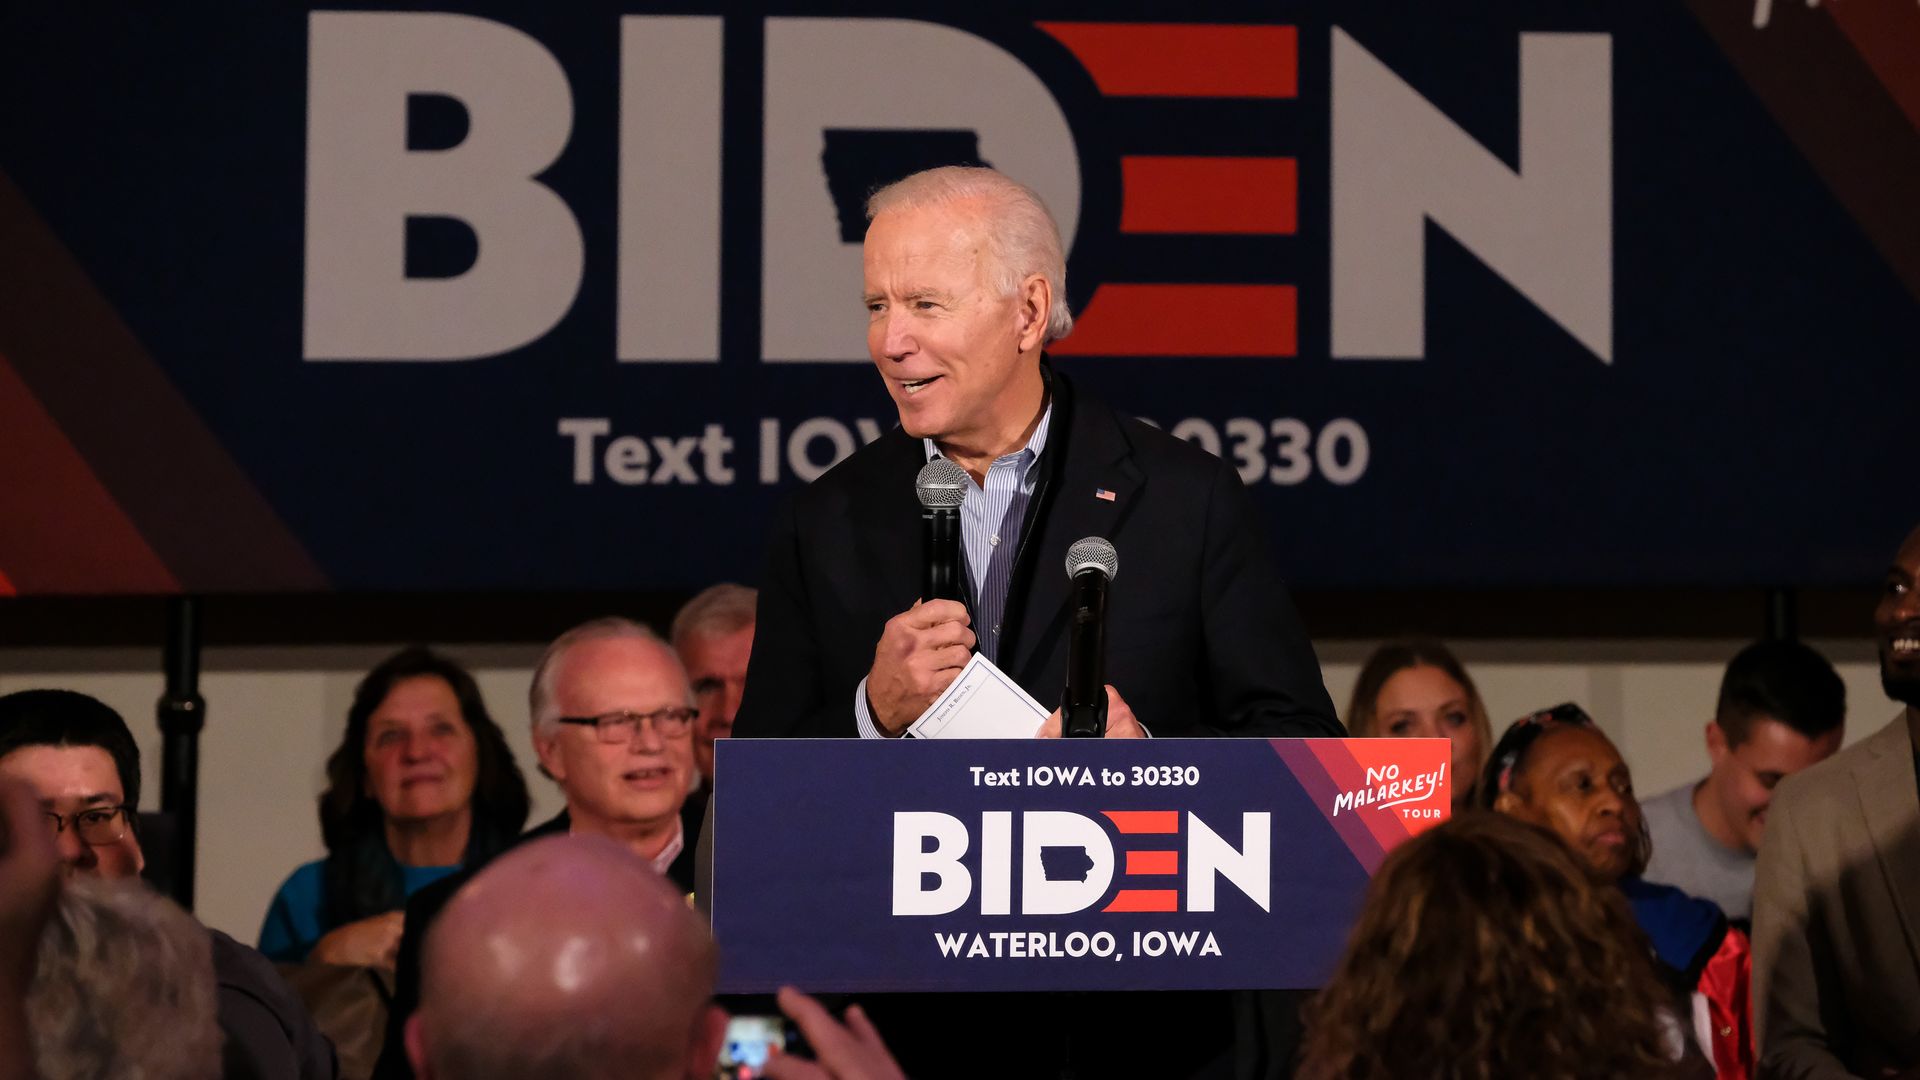 Joe Biden speaking at a campaign event in Iowa